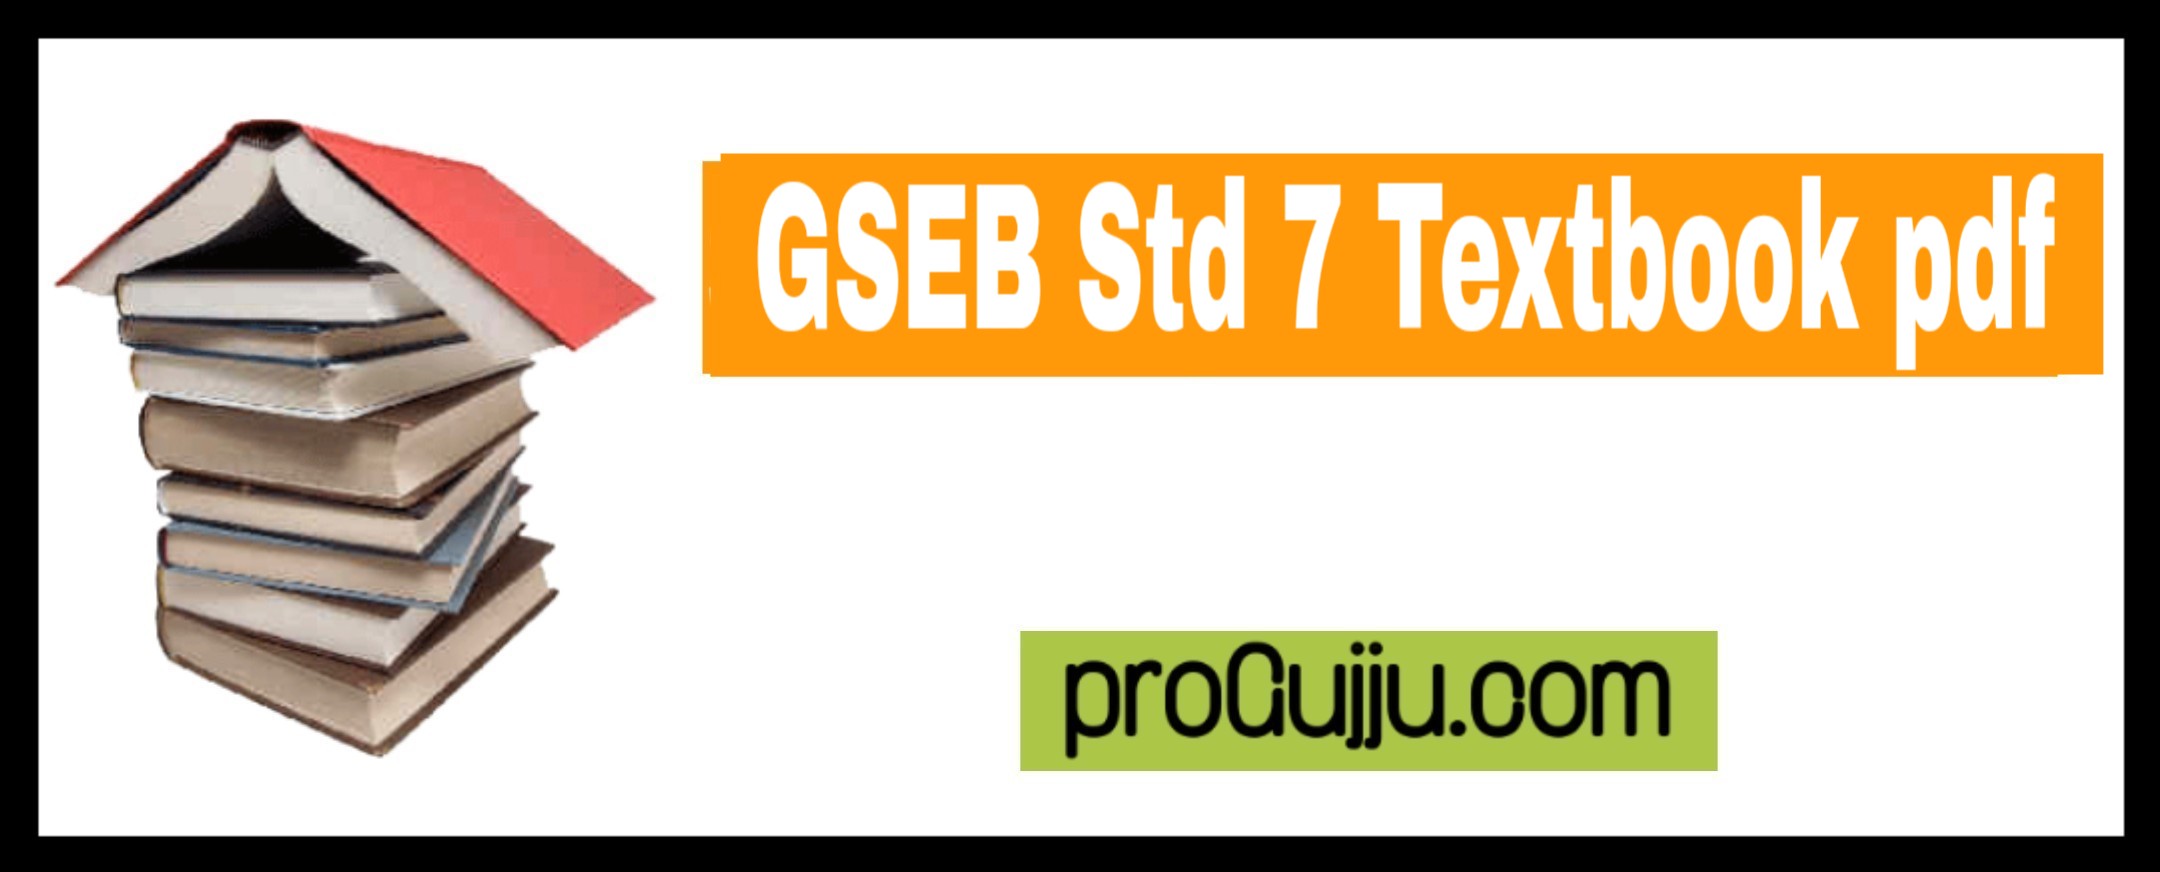 GSEB Std 7 Textbook pdf